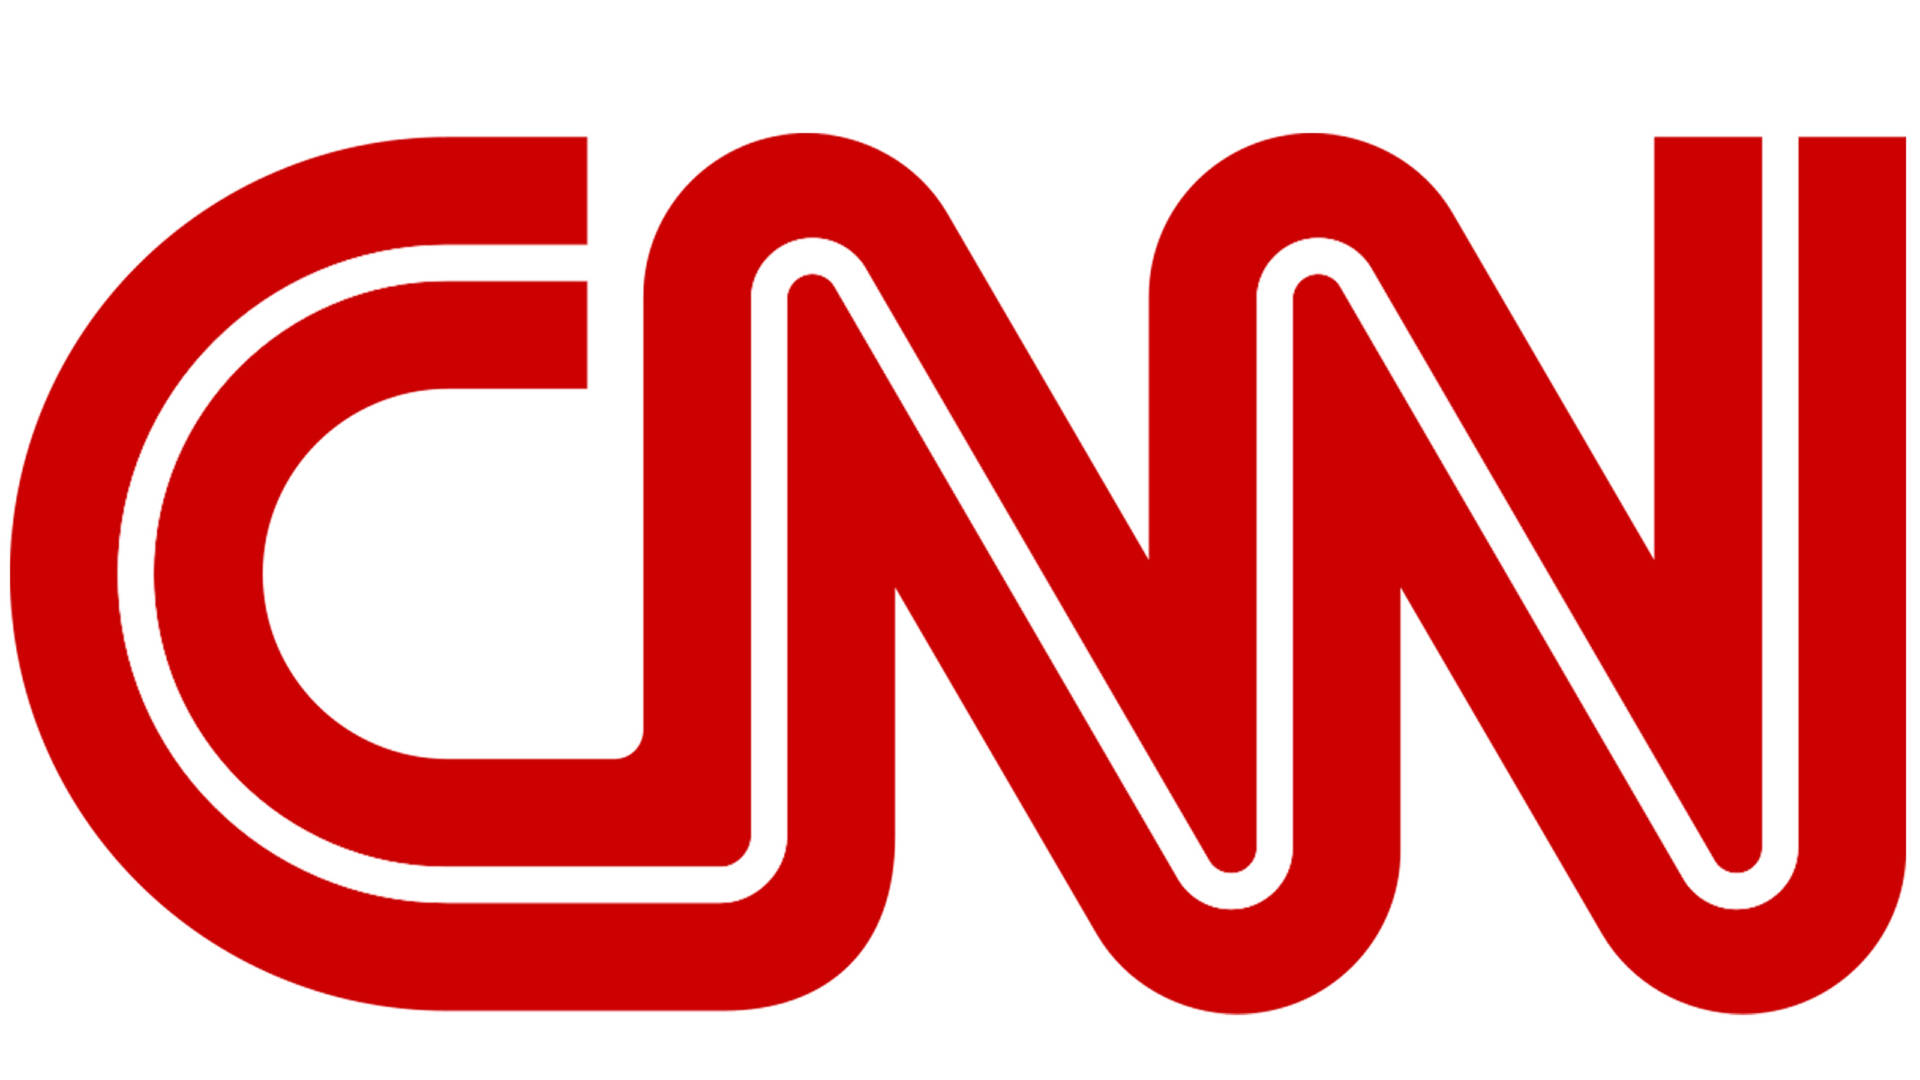 CNN Nyhedskanal Logo Cascader gennem en Metallisk Baggrund. Wallpaper